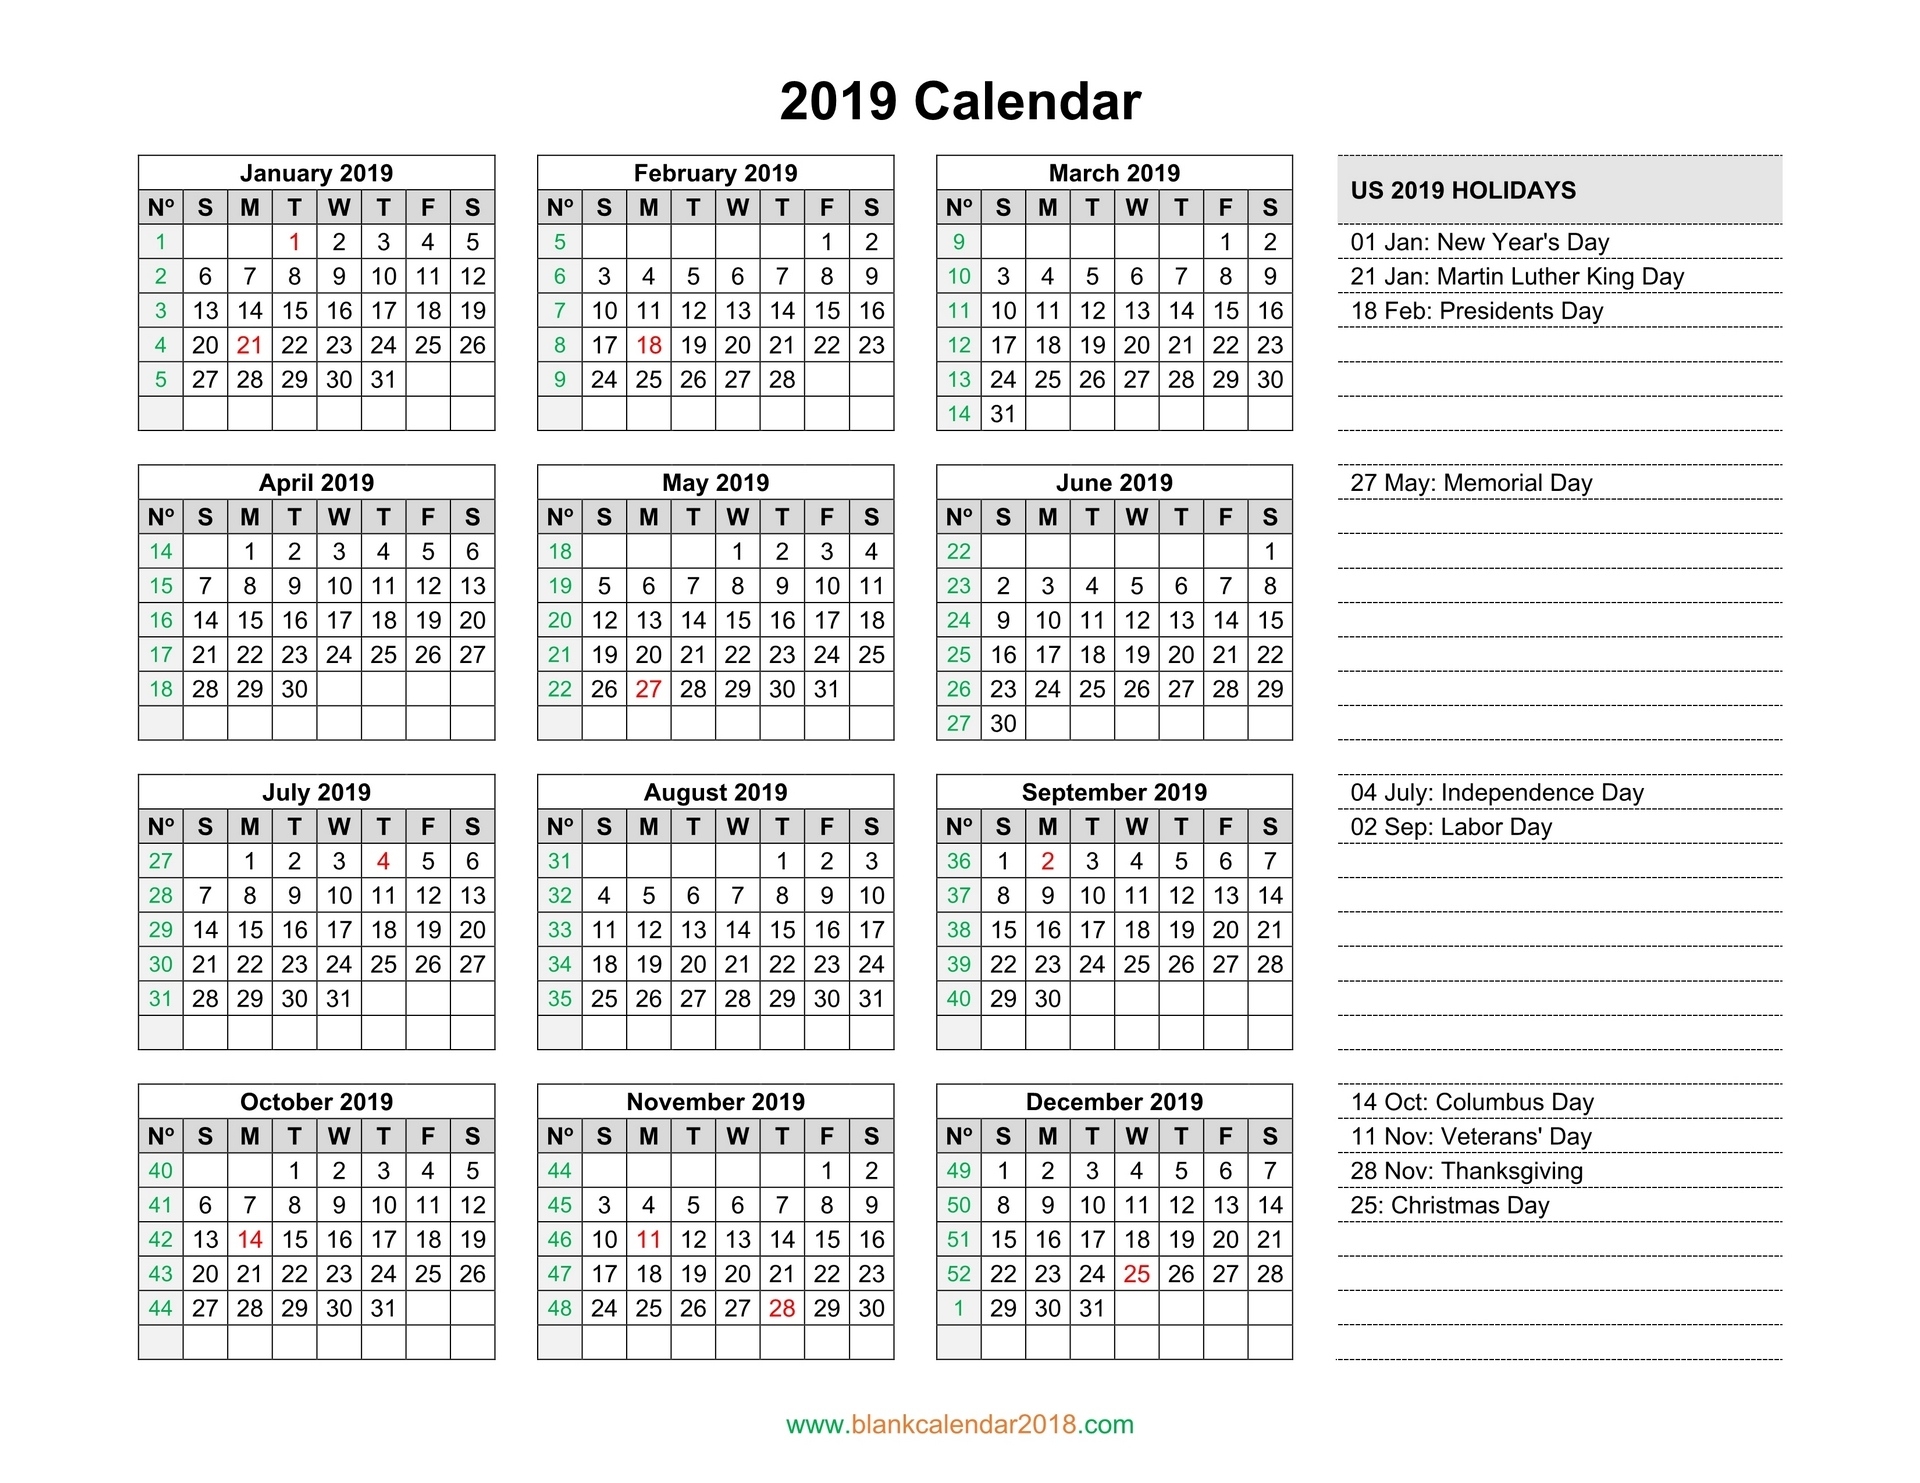 Blank Calendar 2019 Note 8 Calendar Holidays